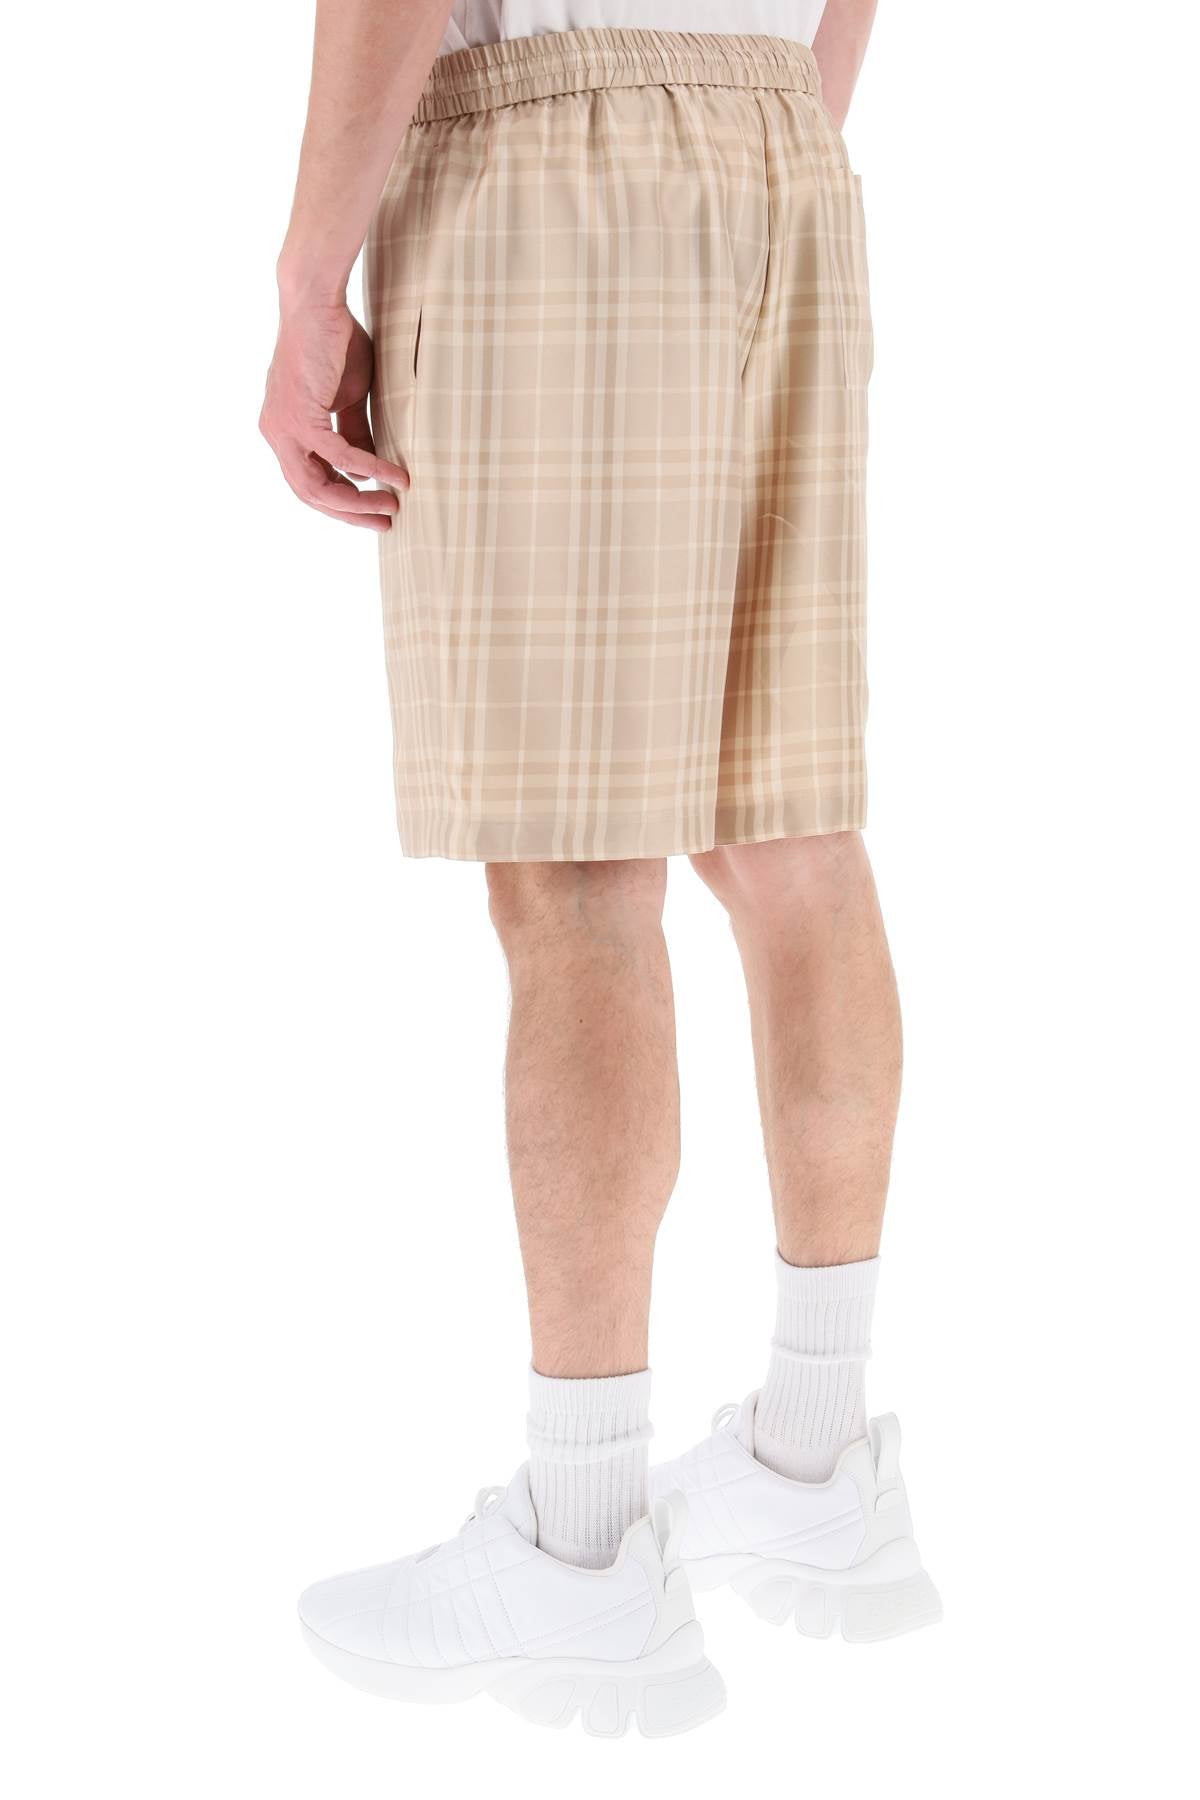 Burberry Tartan Silk Shorts (Size - L)